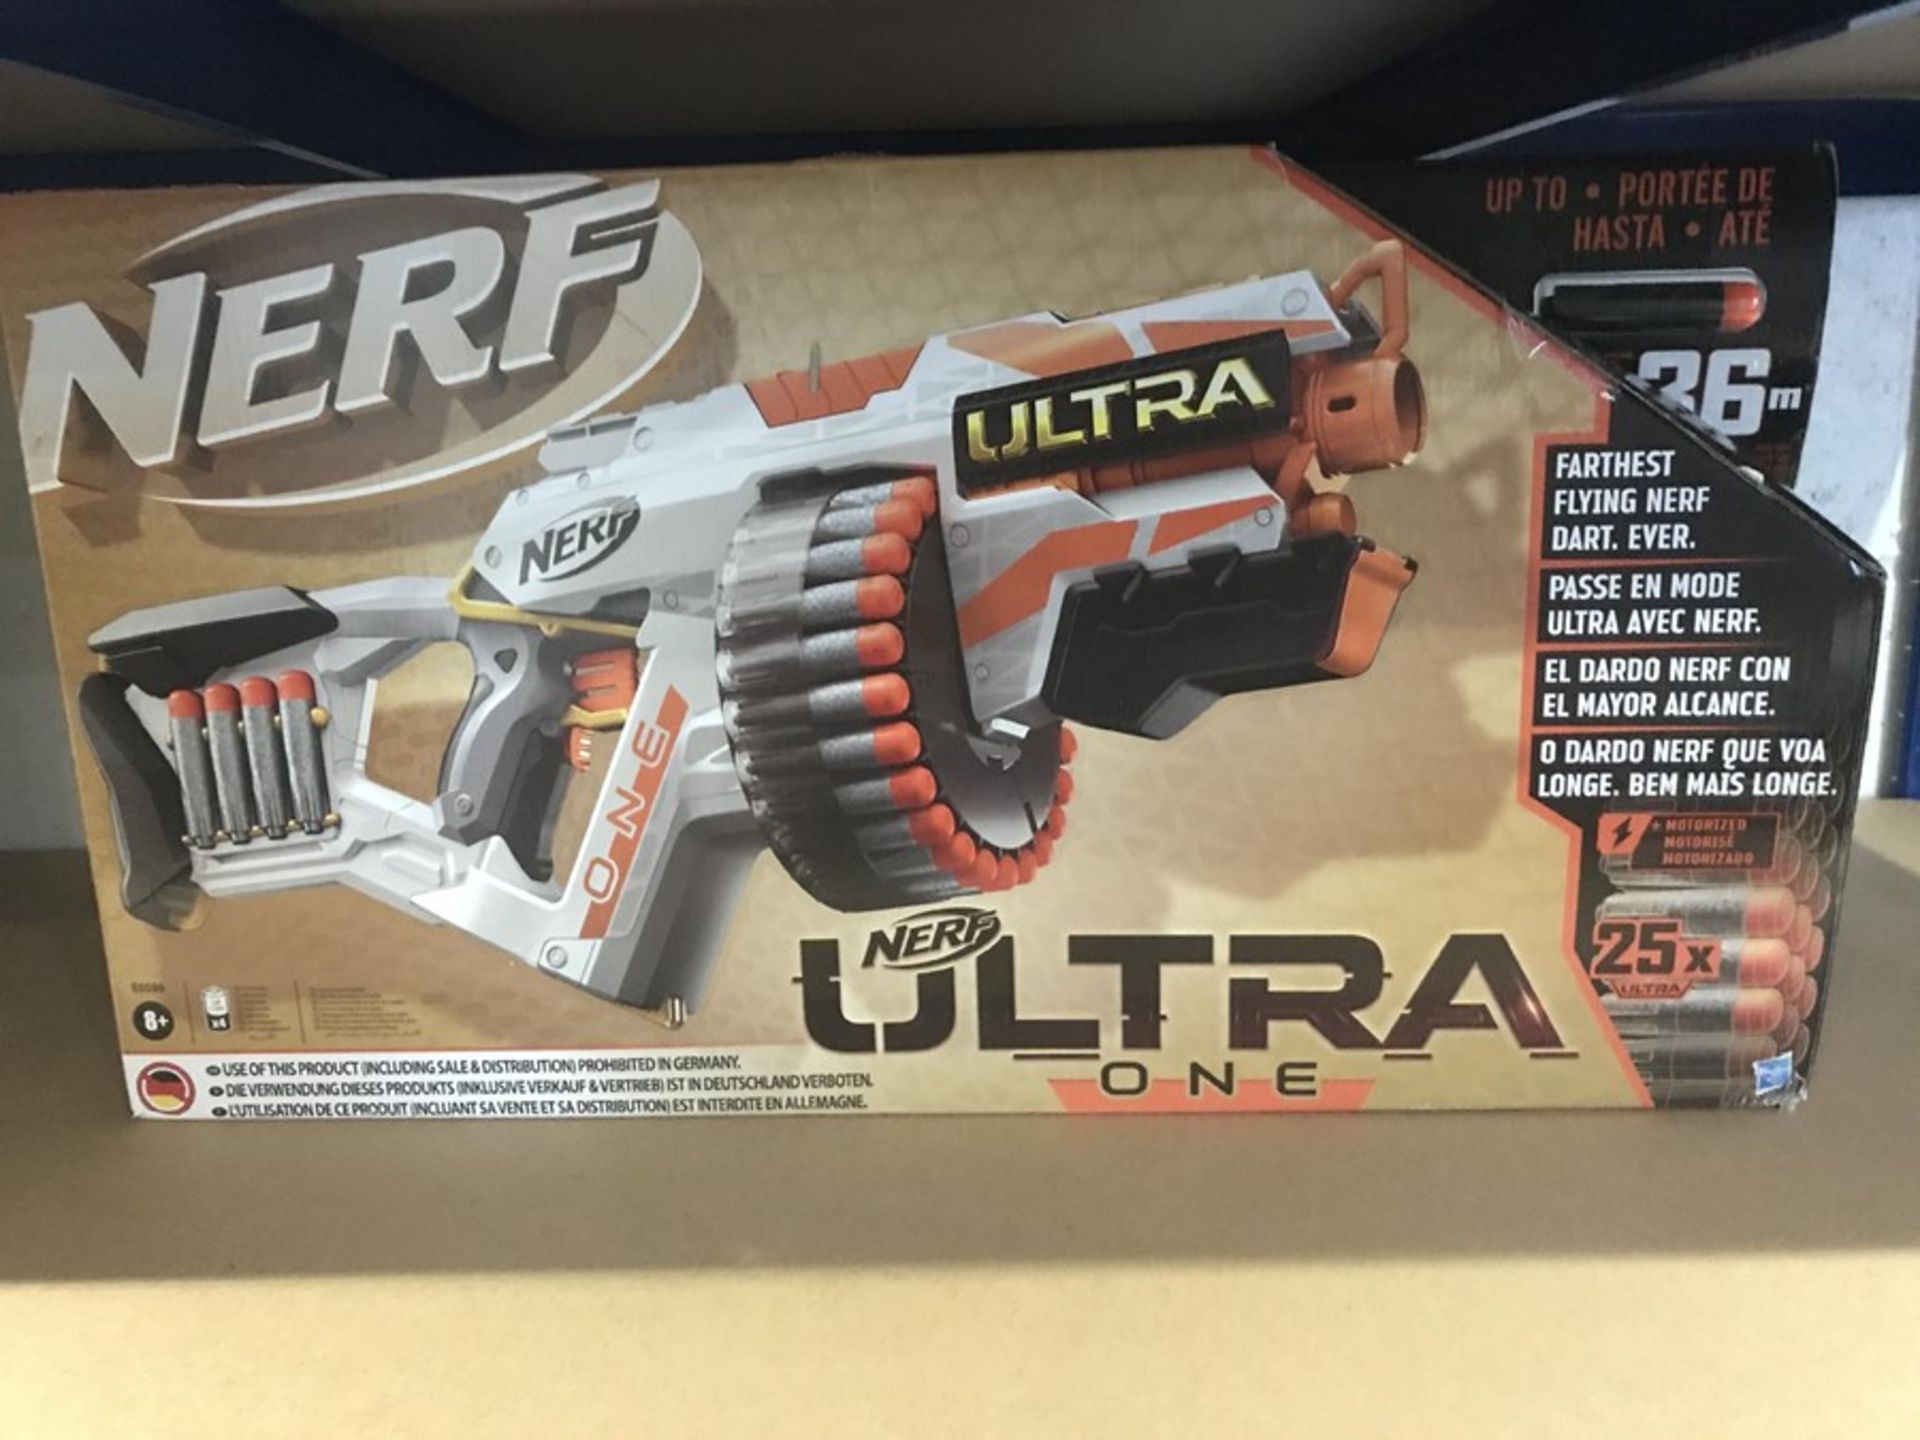 Nerf Ultra One Motorised Blaster, 25 Nerf Ultra Darts, Furthest Flying Nerf Darts Ever, Compati - Image 2 of 2